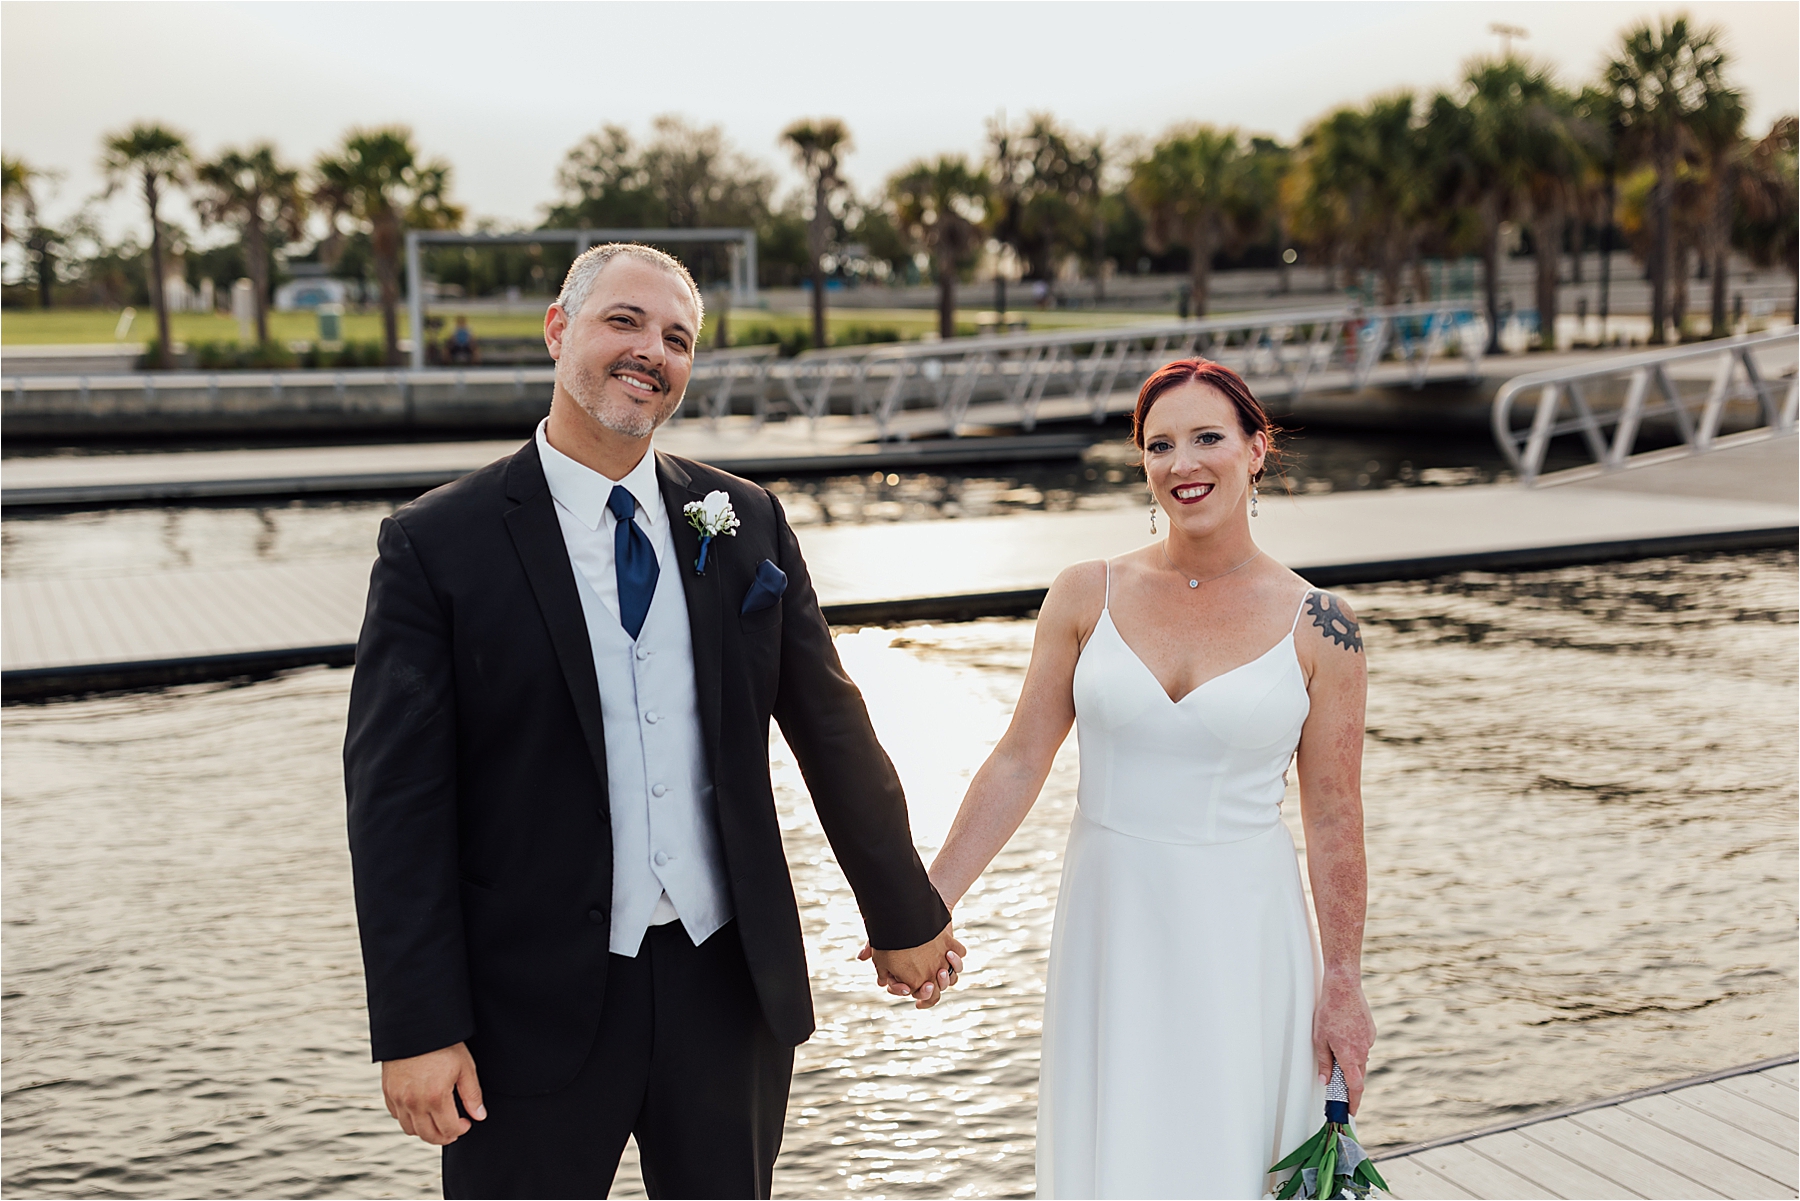 Tampa River Center Wedding